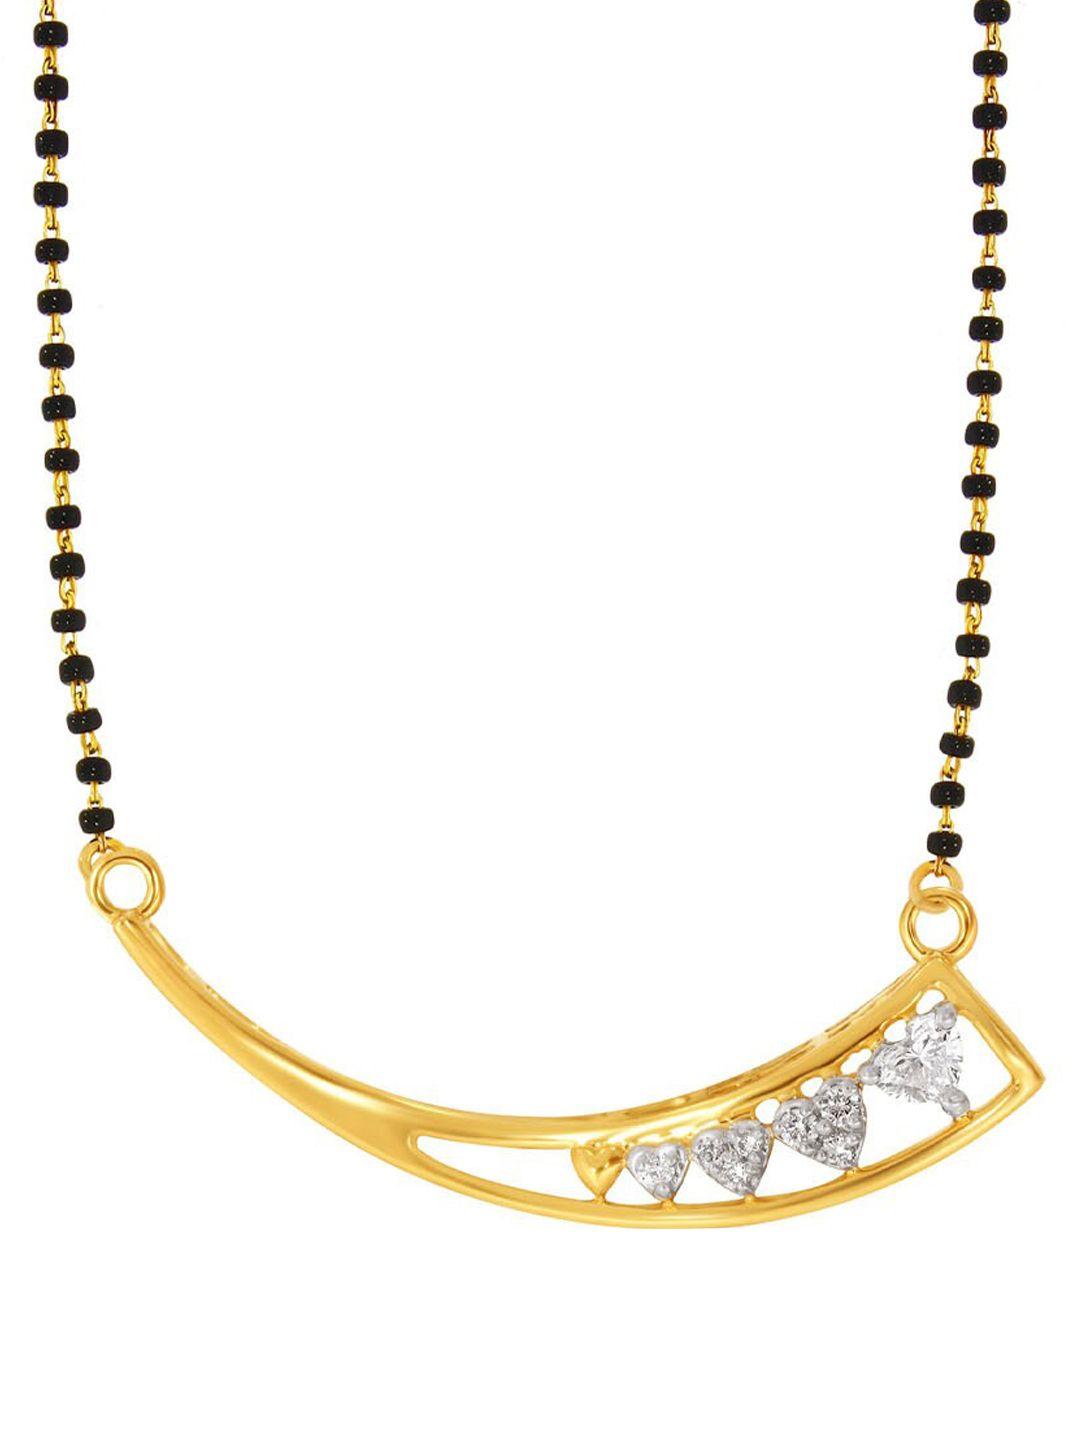 senco-melodious-fondness-18kt-gold-diamond-studded-mangalsutra-pendant-2.2gm